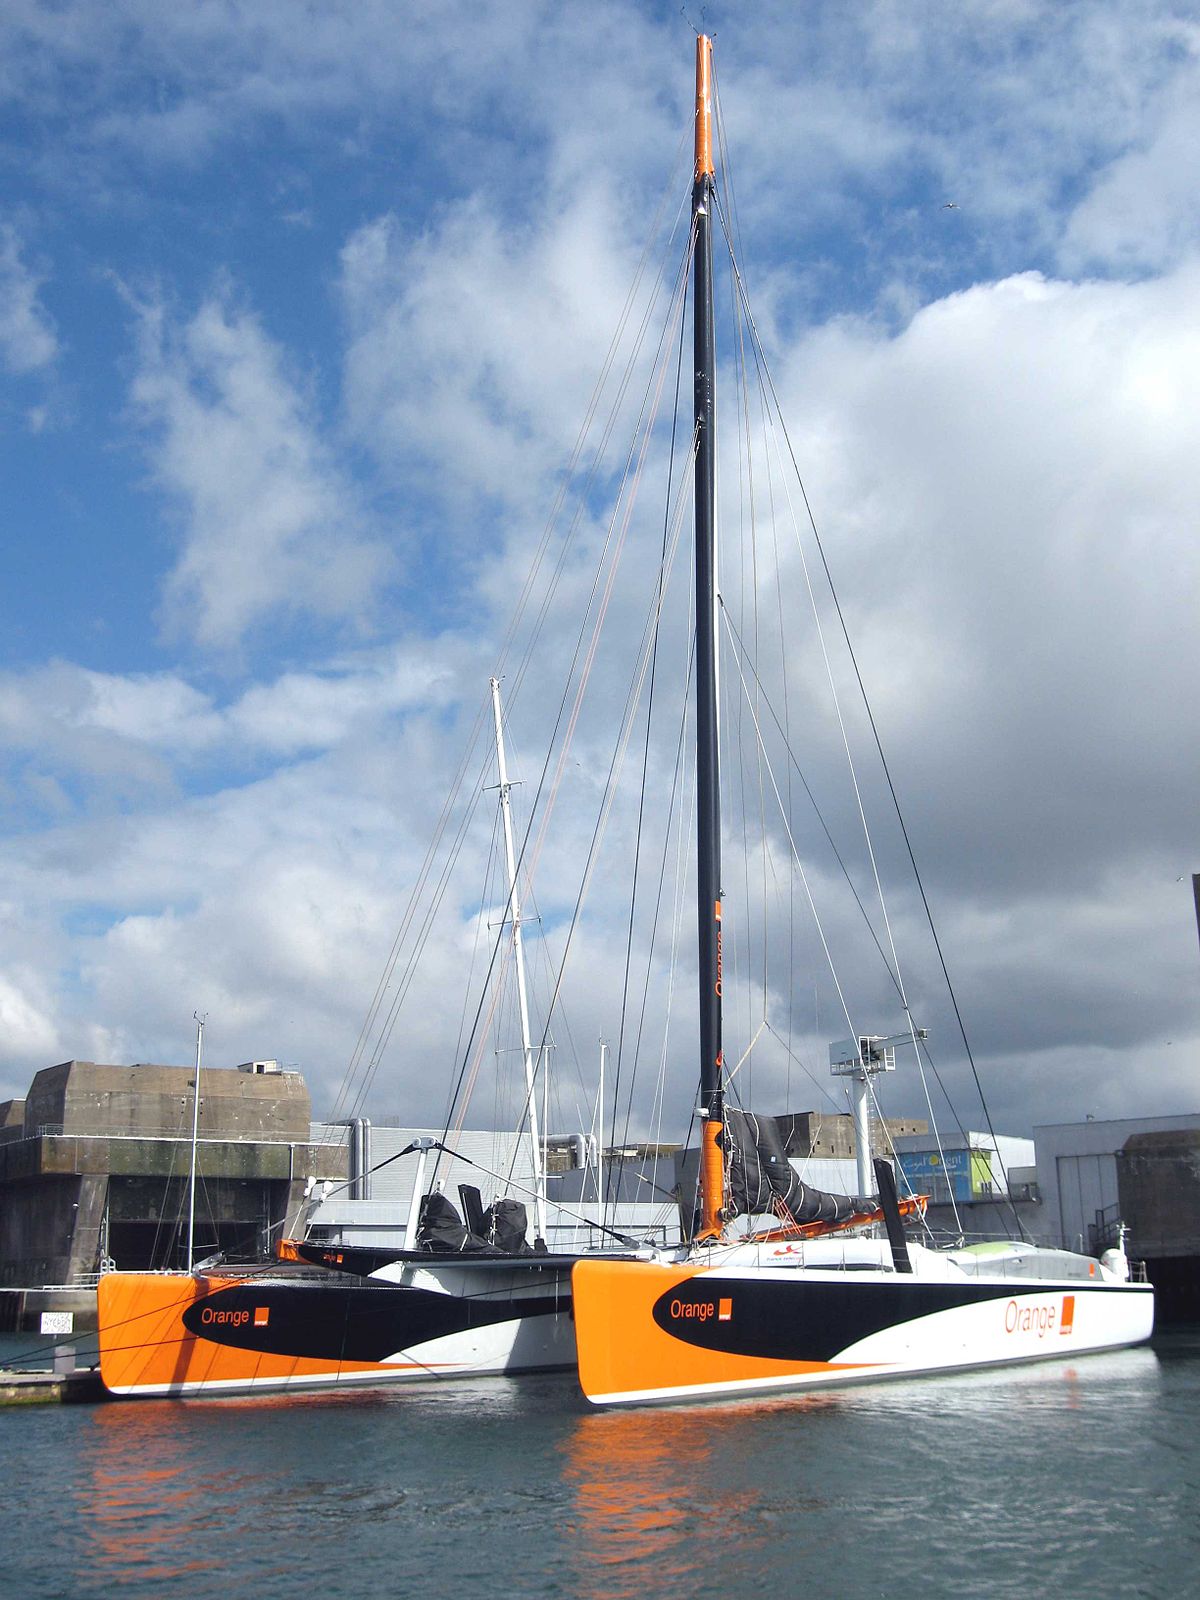 Le maxi catamaran Orange 2 de 37 m de long